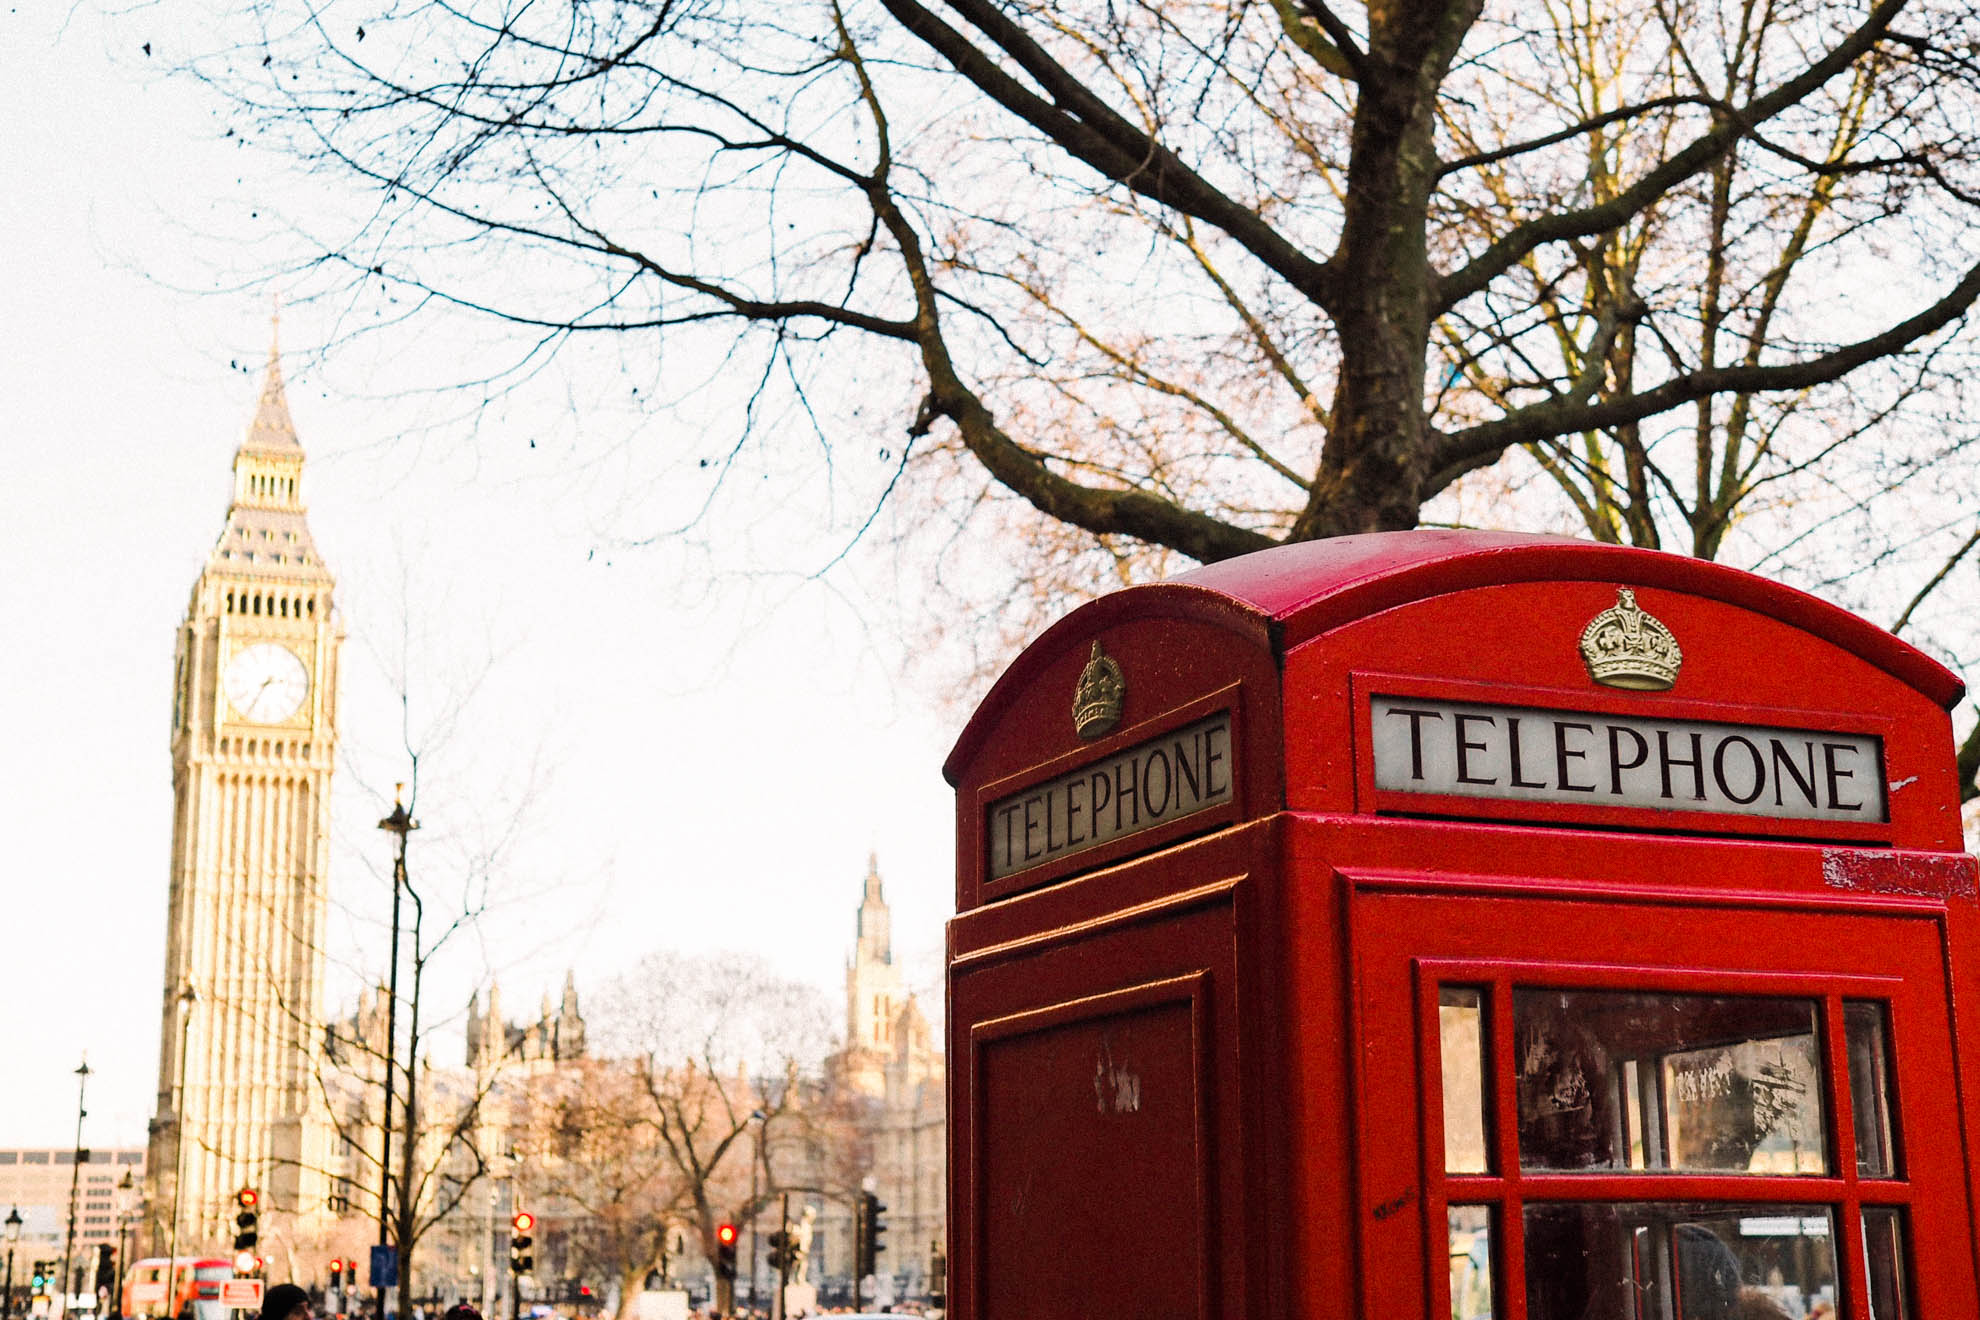 London, England Photo Diary